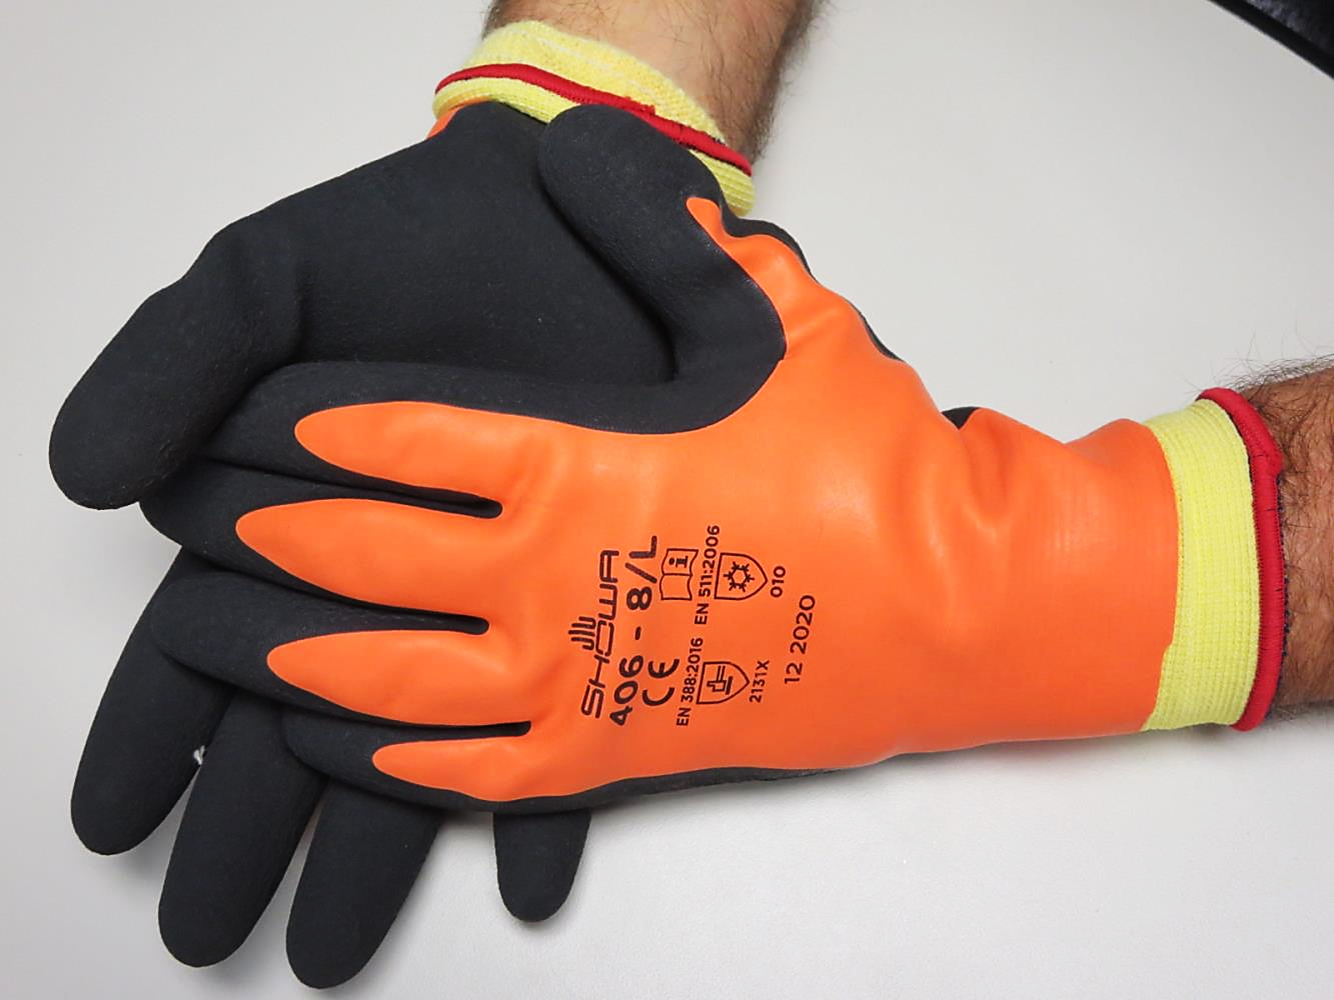 Showa® 406 rubber palm coated fluorescent orange insulated waterproof winter work gloves